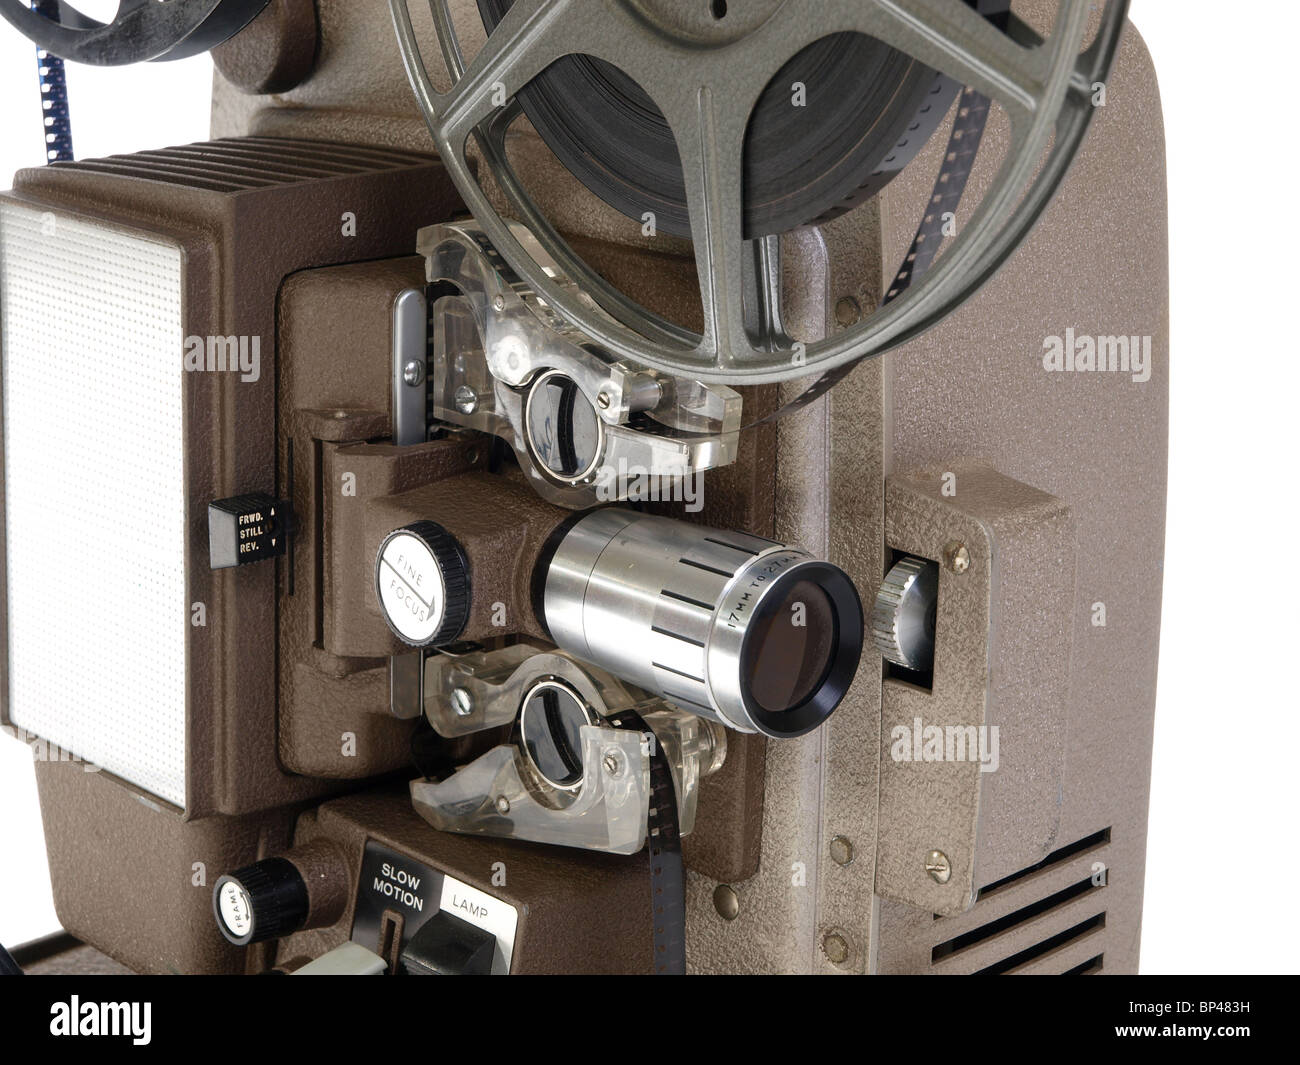 https://c8.alamy.com/comp/BP483H/vintage-8-mm-film-projector-in-mint-condition-BP483H.jpg